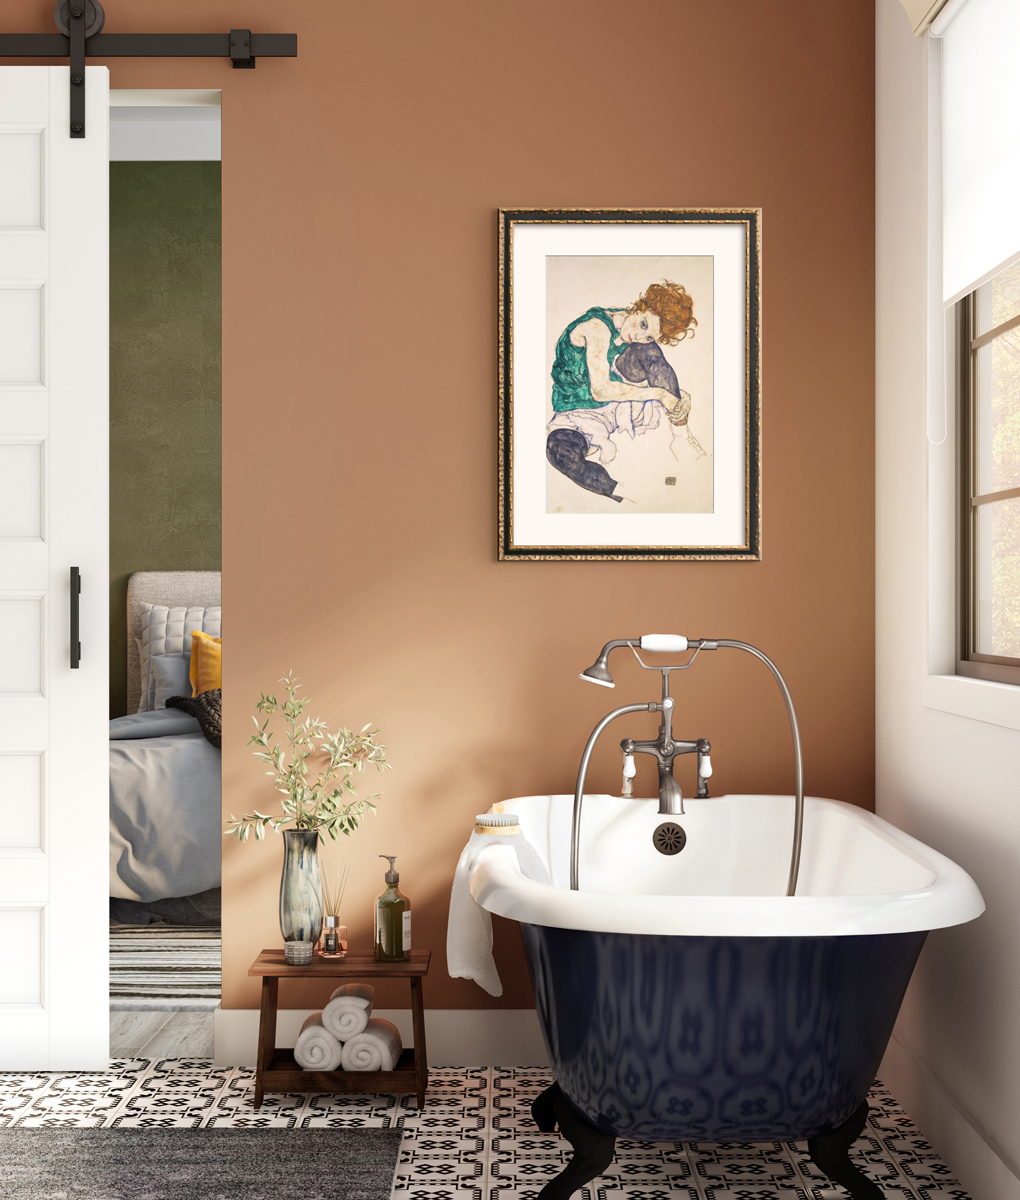 Bath - Bathroom Sets, Bathroom Towels, Wall Art & More